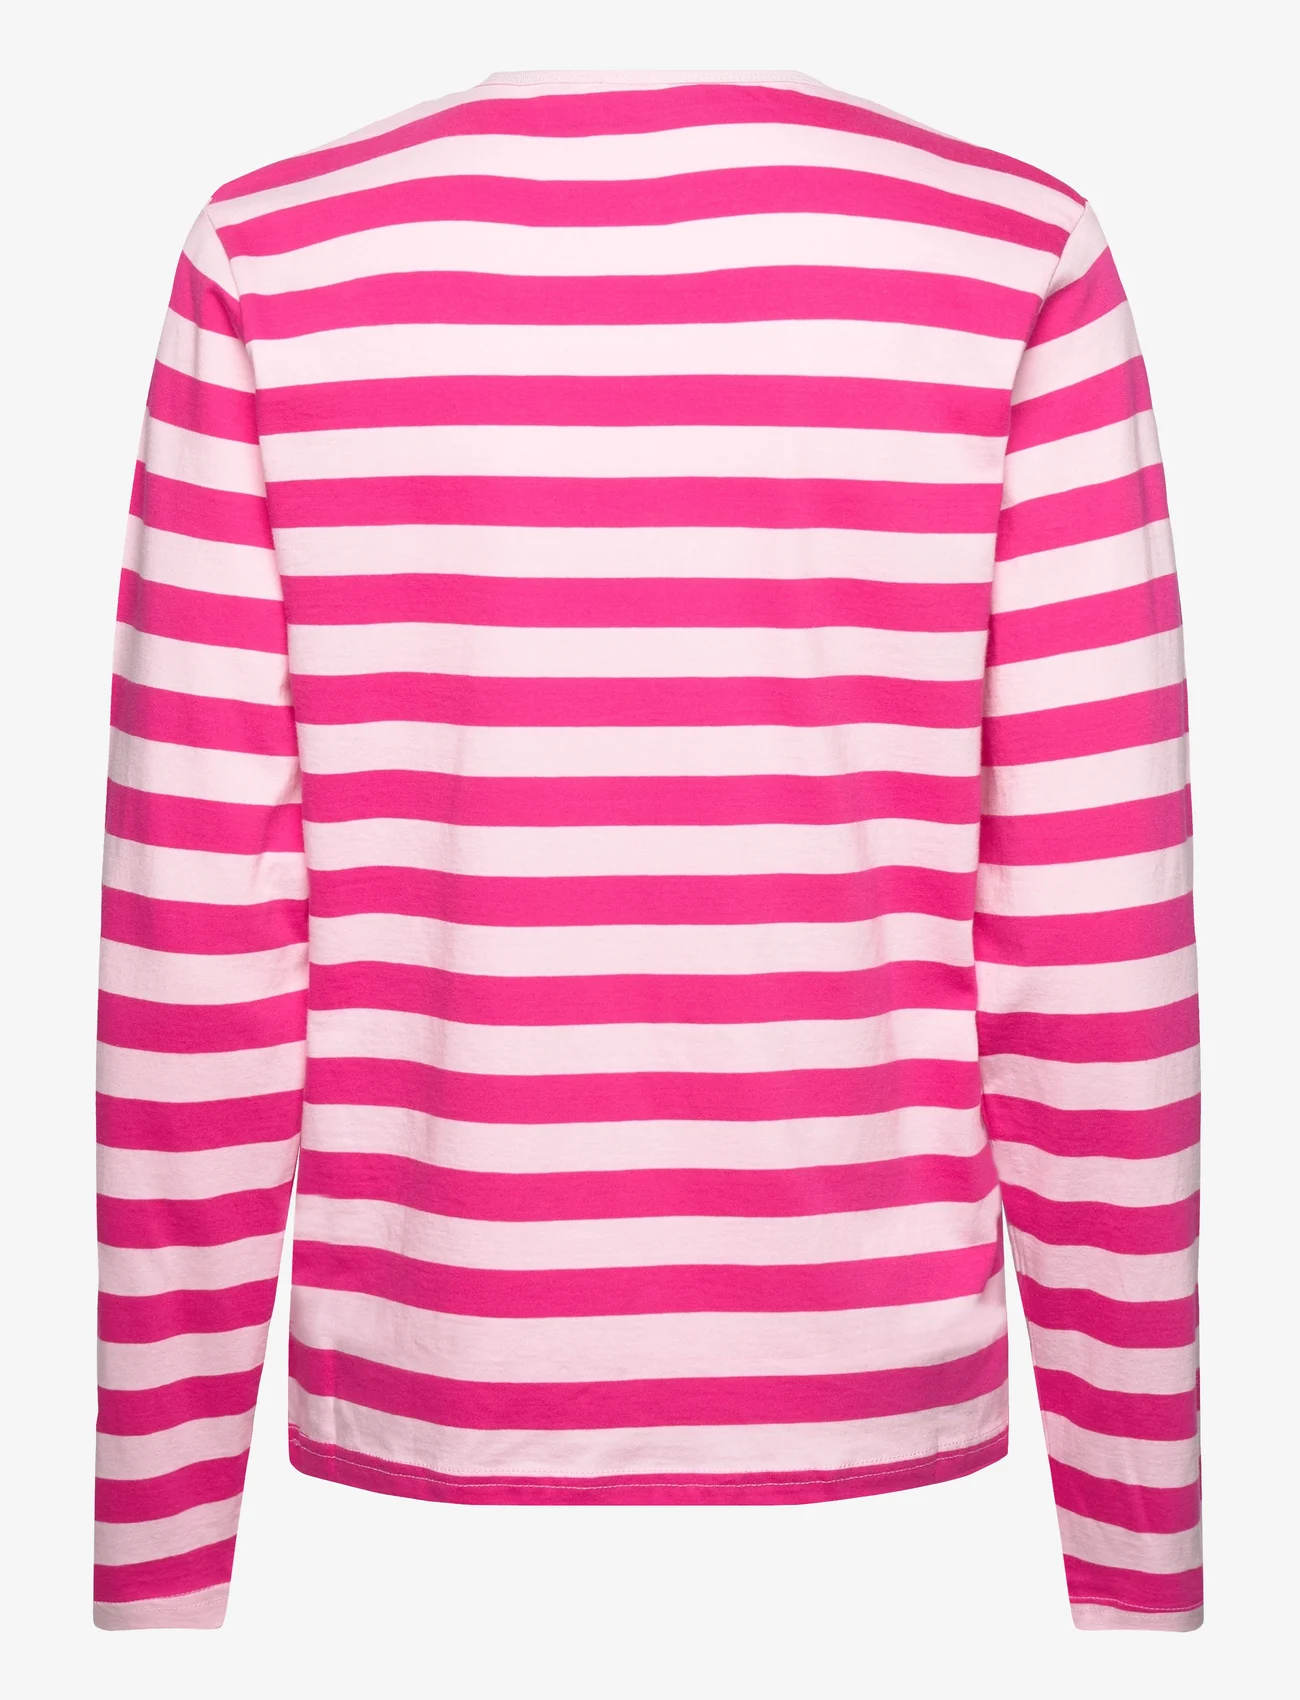 Martinex - KUISMA SHIRT MY STRIPE - long-sleeved shirts - pink - 1